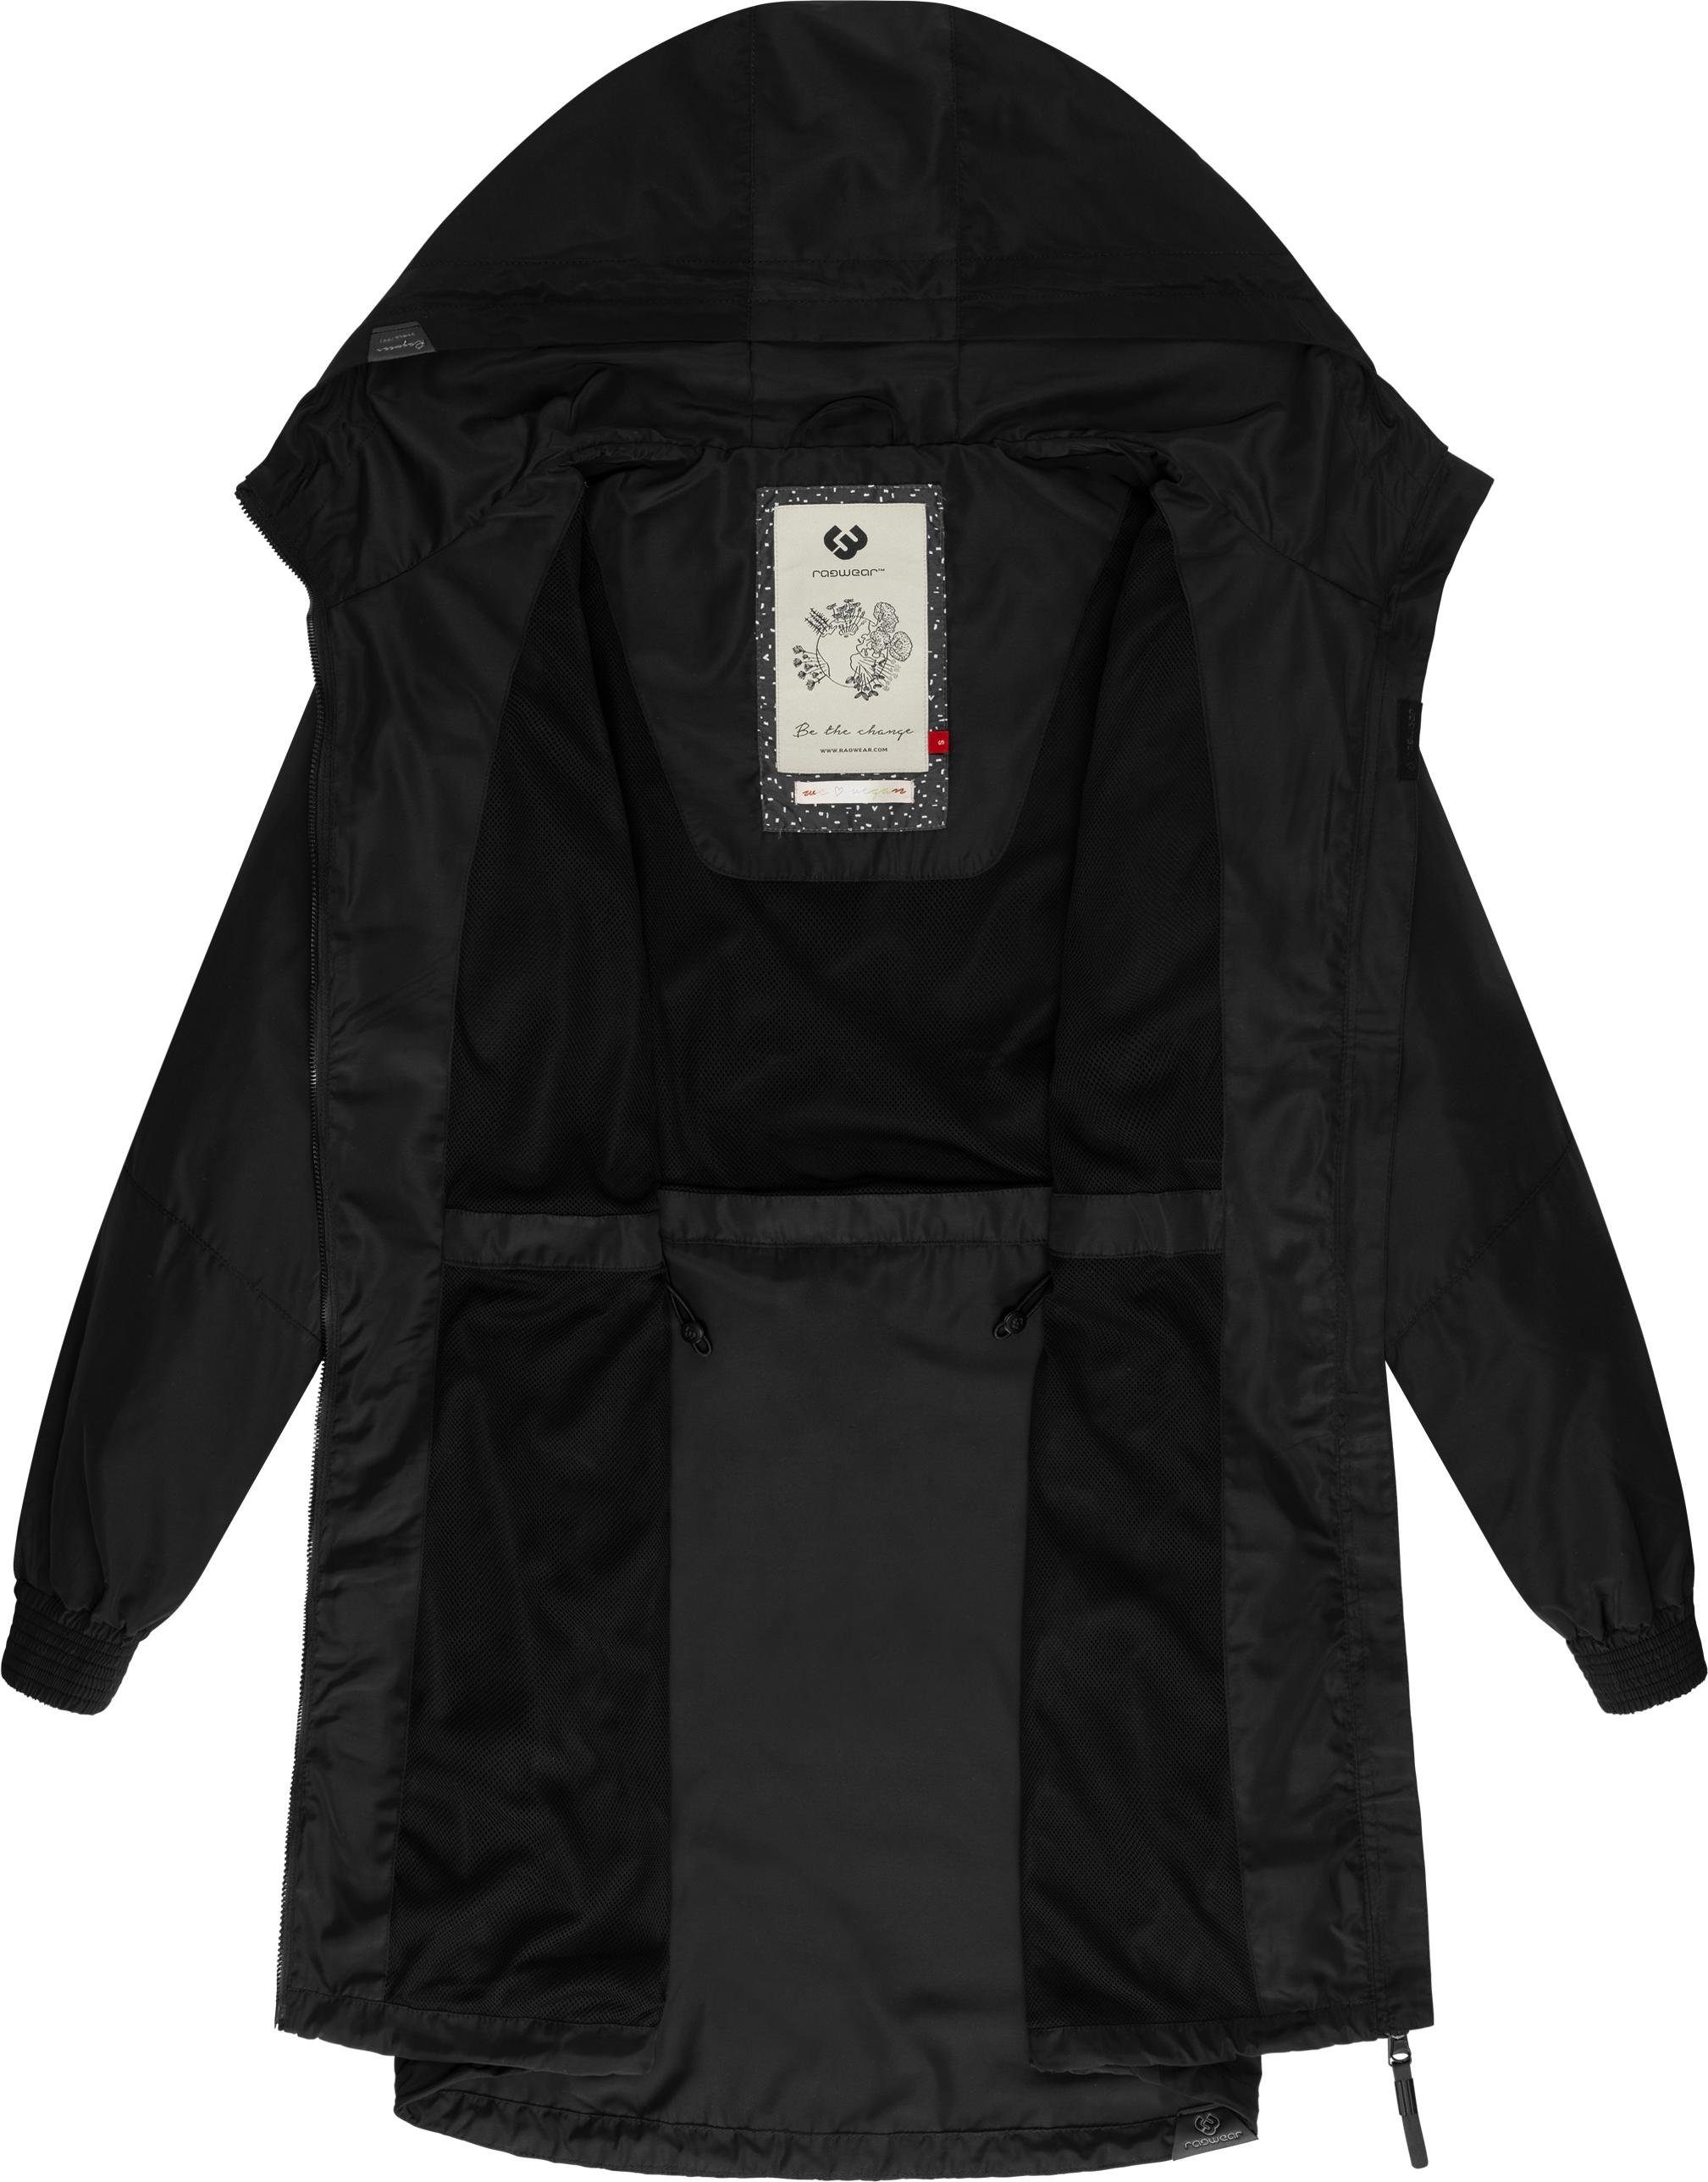 Ragwear Outdoorjacke Bronja stylischer unifarbener schwarz Übergangsmantel